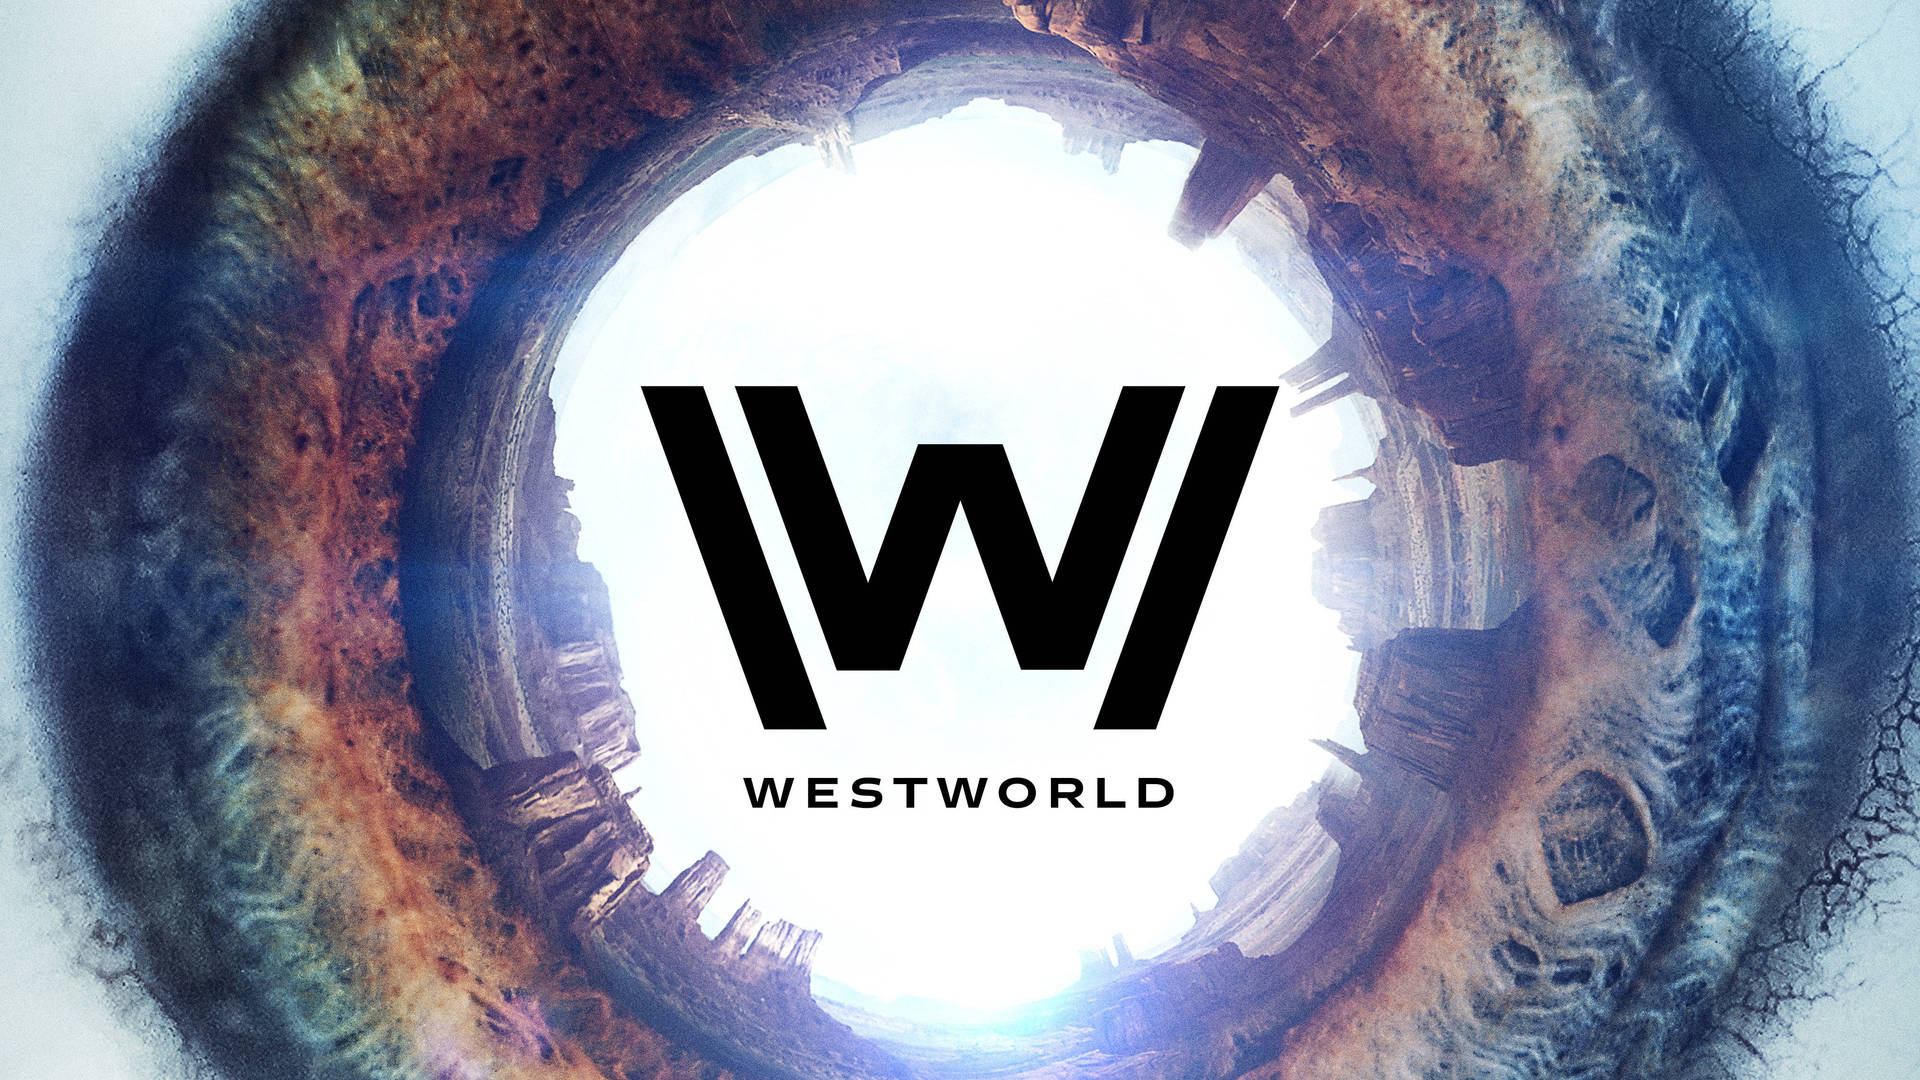 Westworldlogo Mit Dimensions-eingang Wallpaper